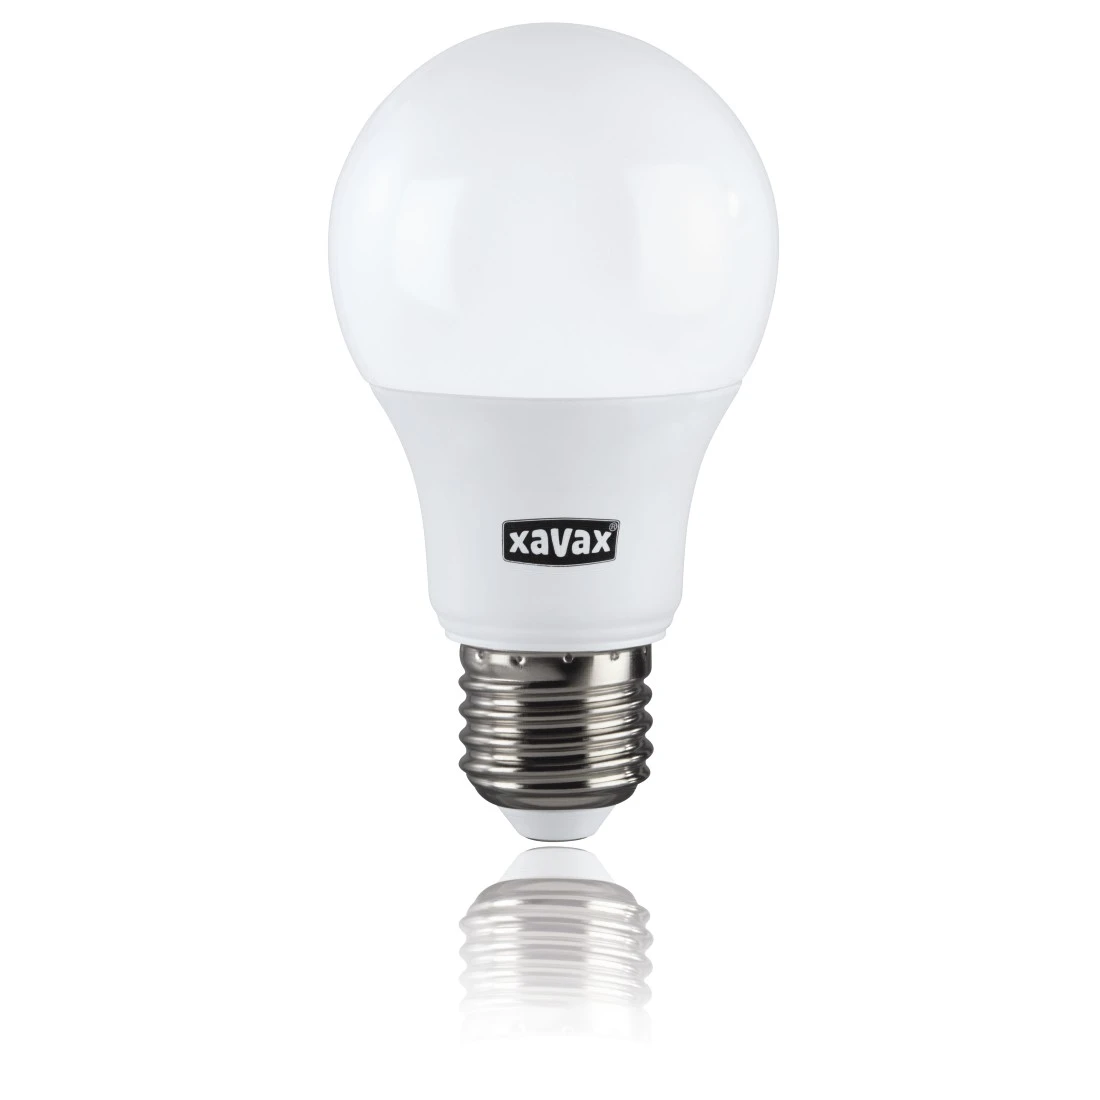 abx2 Druckfähige Abbildung 2 - Xavax, LED-Lampe, E27, 806lm ersetzt 60W, Glühlampe, Warmweiß, 2 Stück